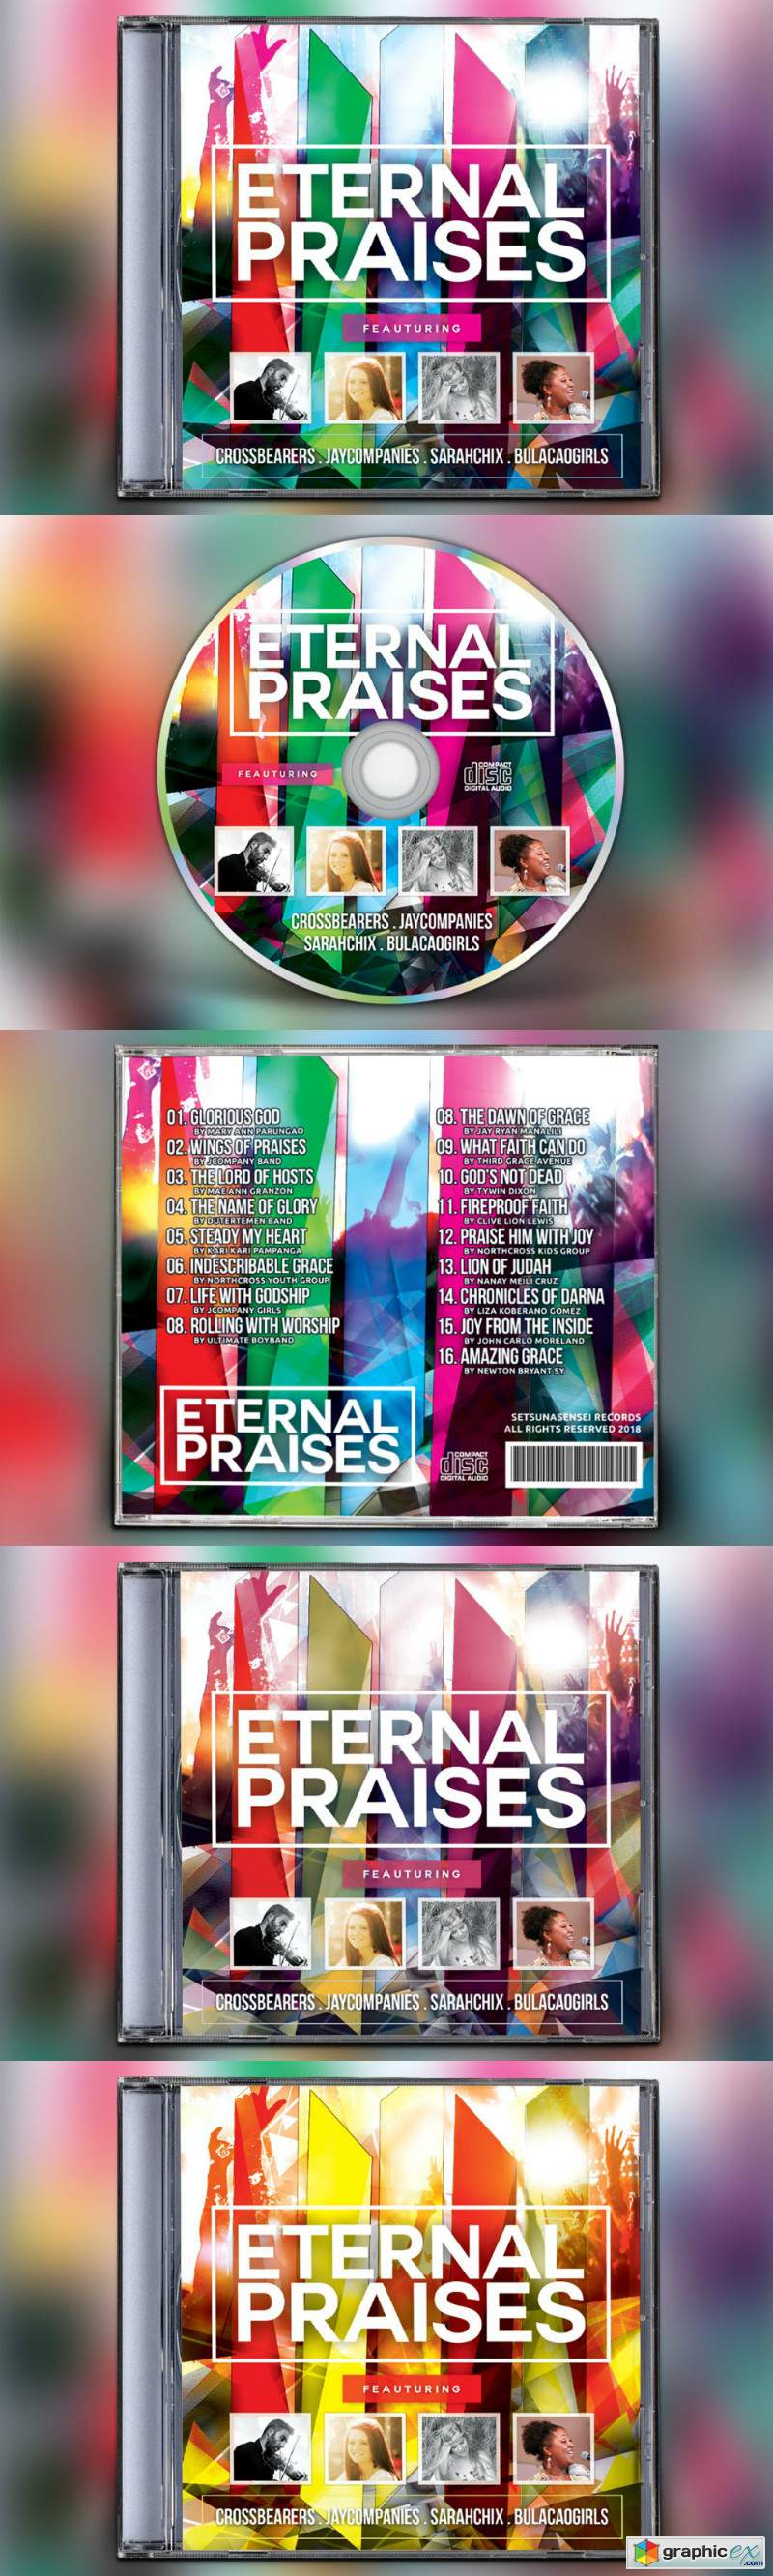 Eternal Praises CD Album Artwork